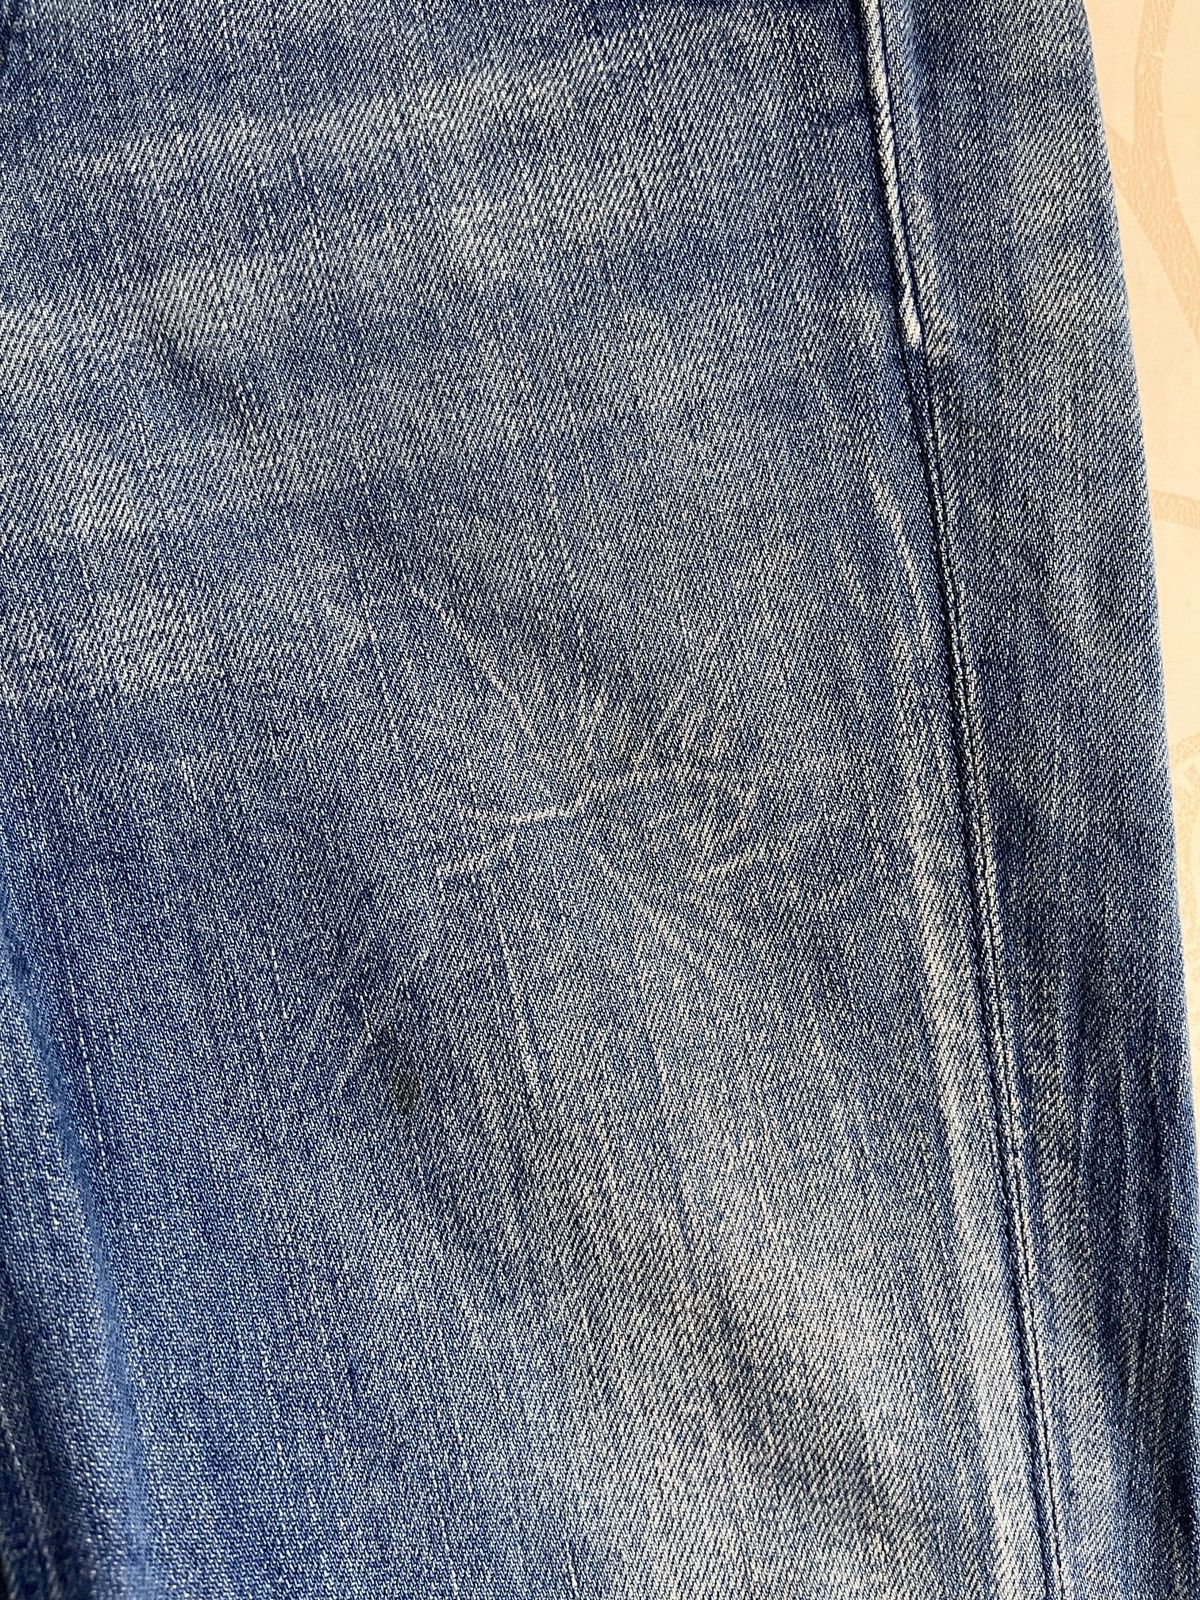 Marithe Francois Girbaud Skinny Ankle Signage Denim Jeans - 17